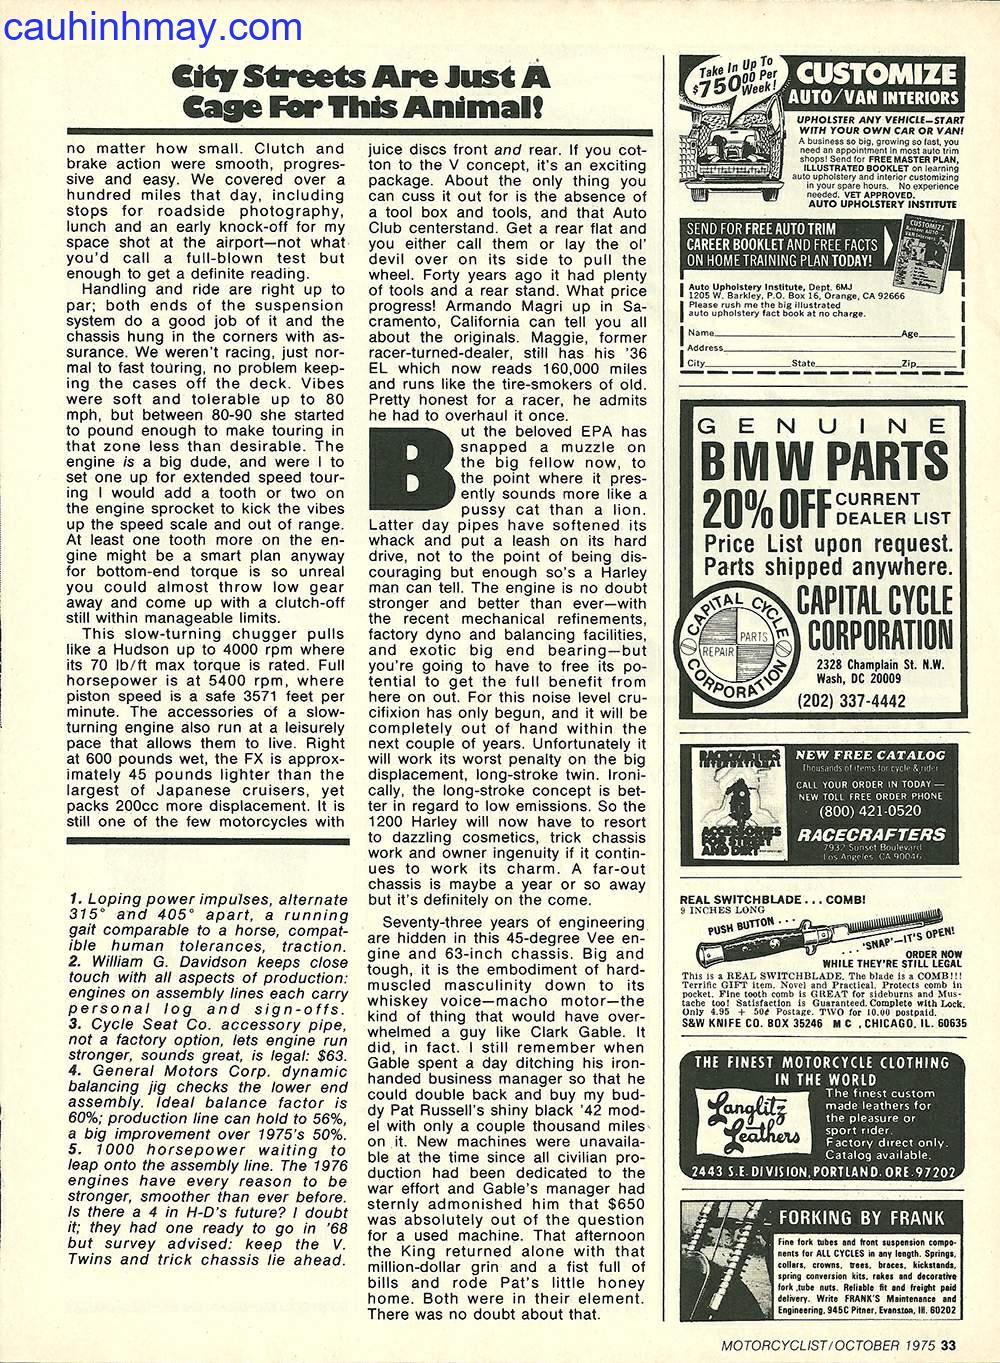 1976 HARLEY DAVIDSON SUPER GLIDE LIBERTY EDITION  - cauhinhmay.com